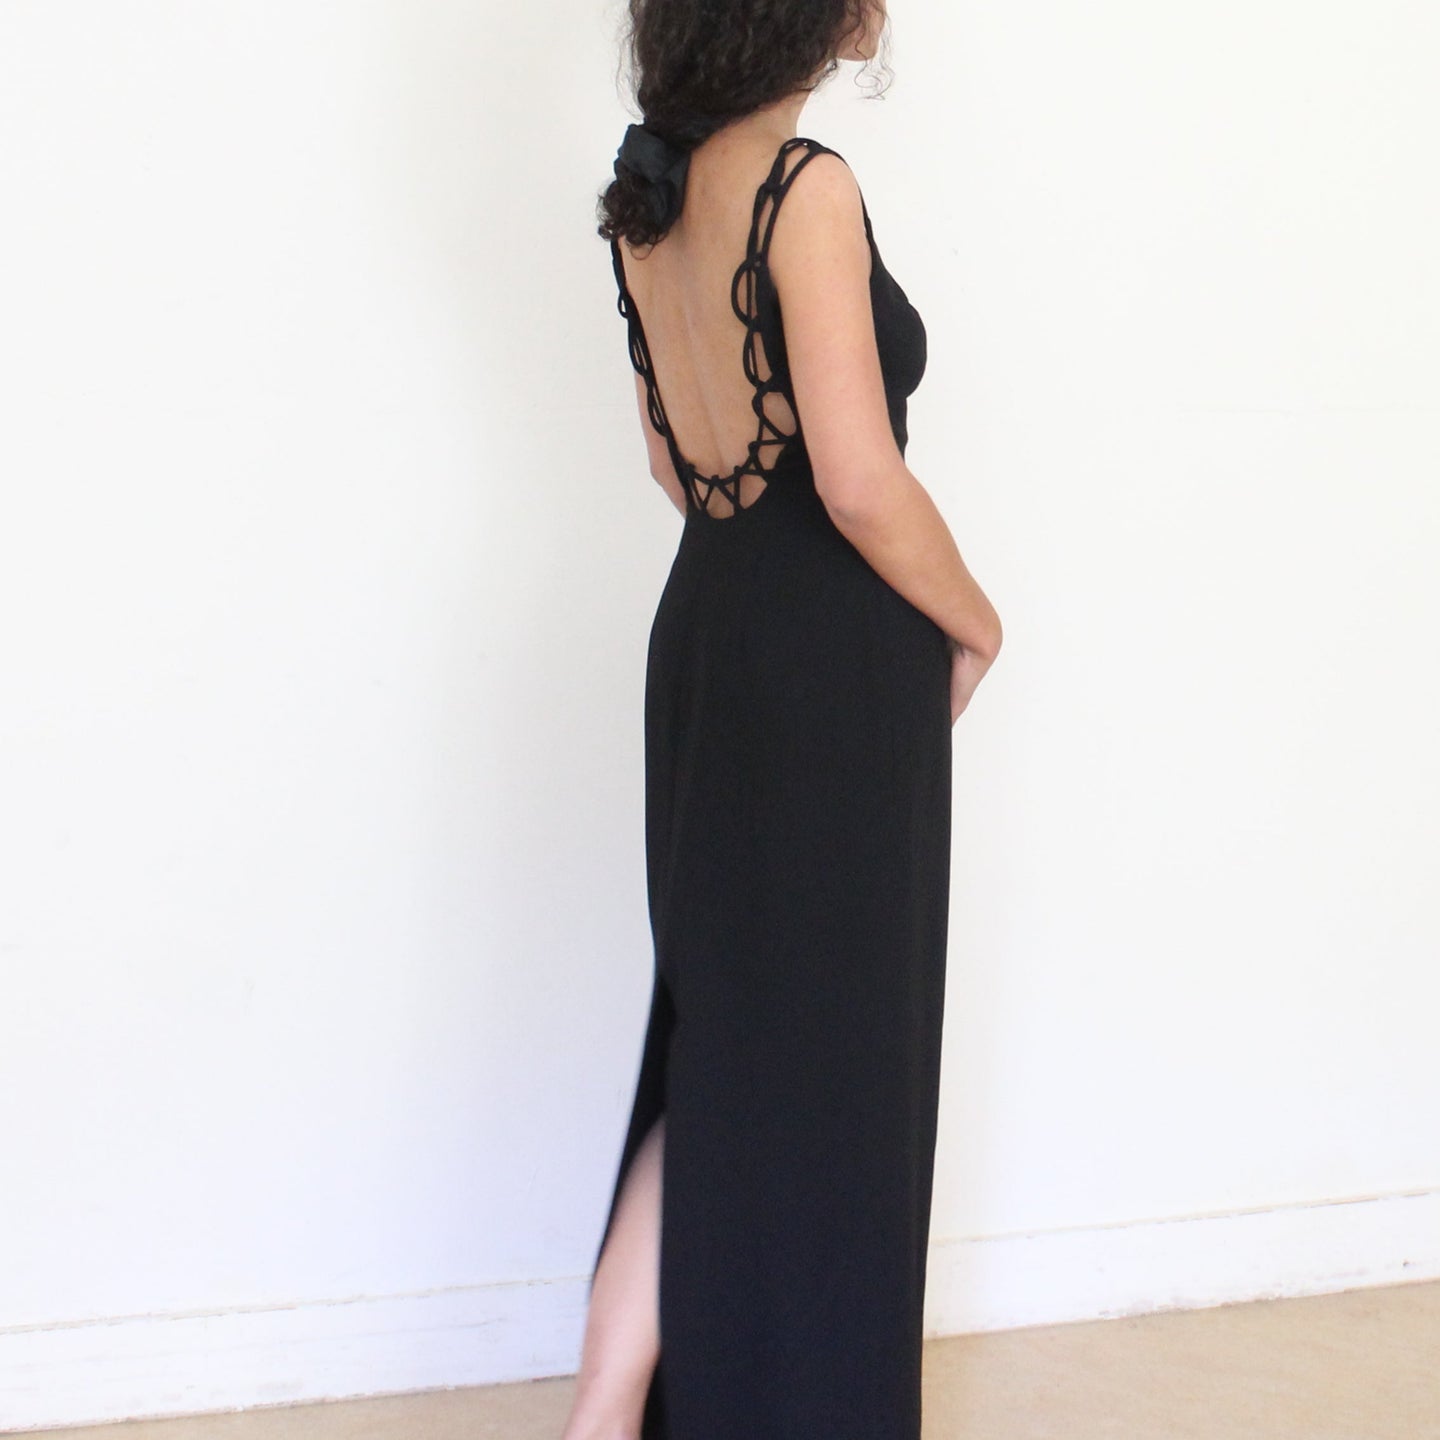 Vintage black evening dress, size S/M